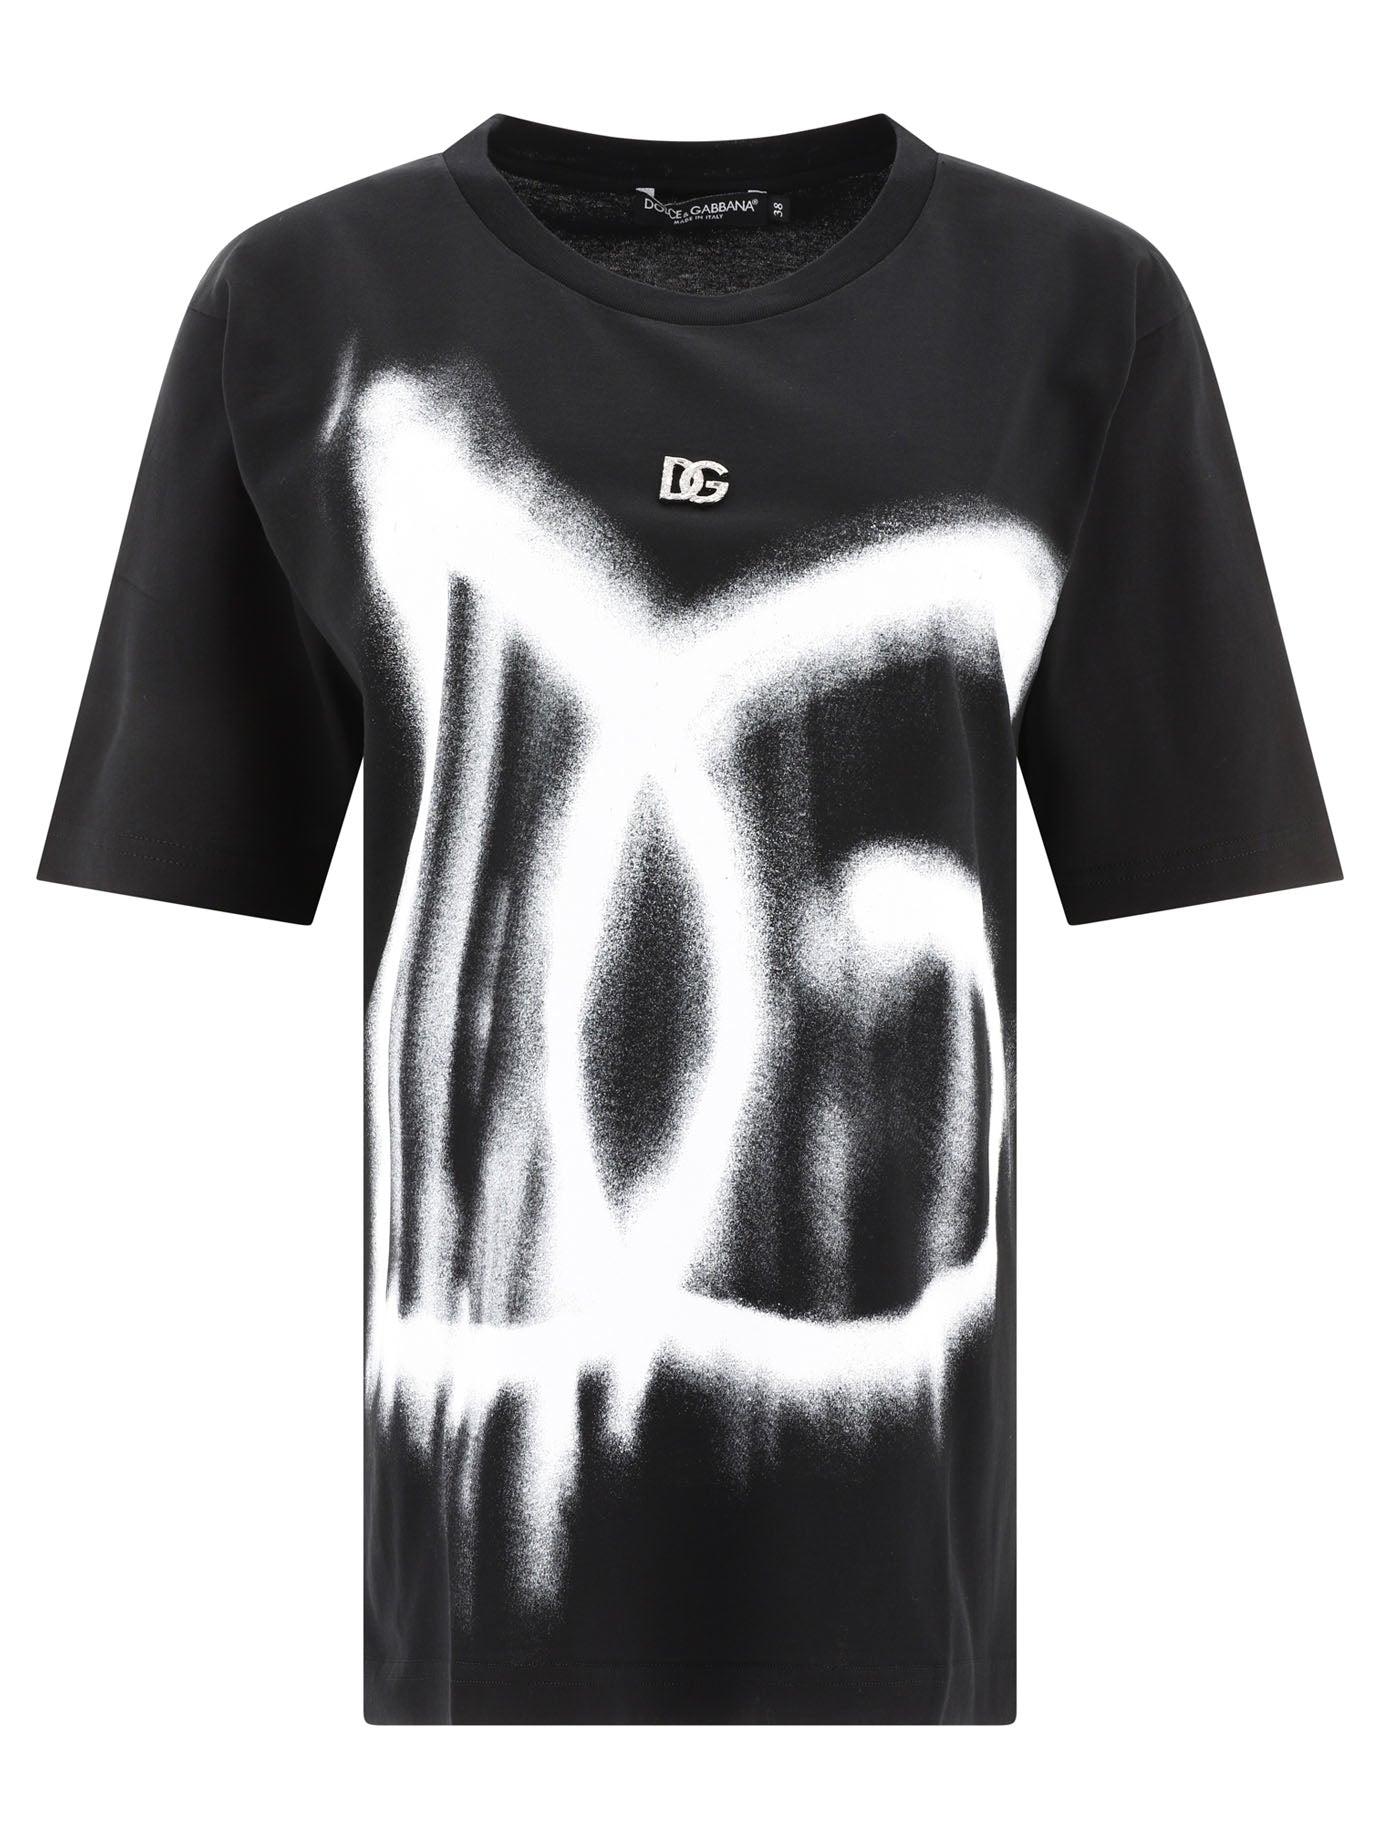 Dolce & Gabbana "dg Spray Paint" T-shirt in Black | Lyst